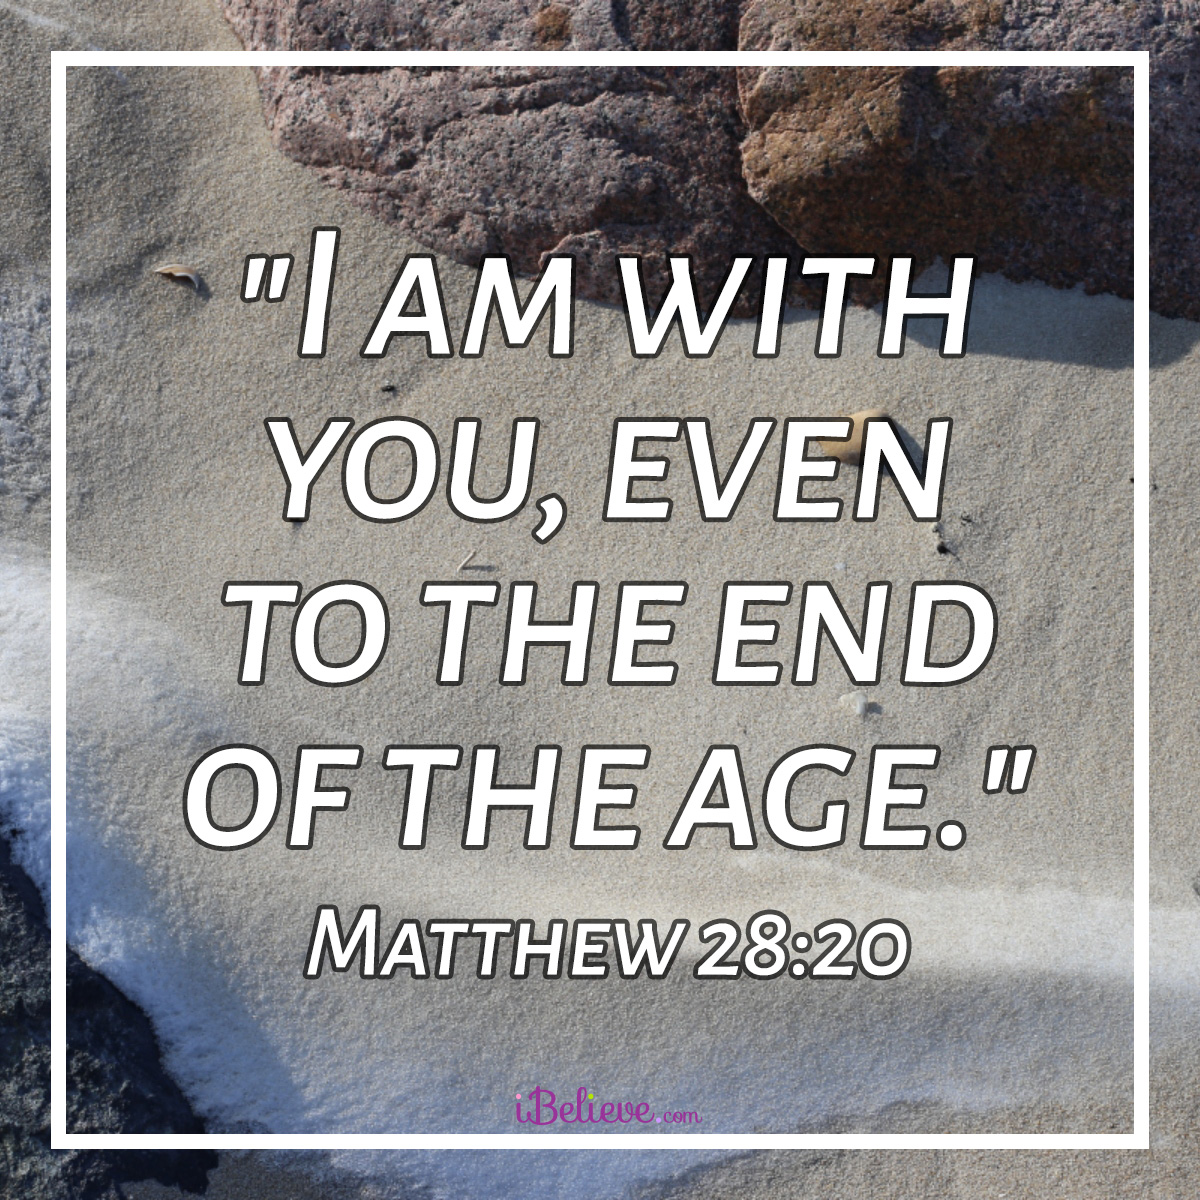 Matthew 28:20 square image